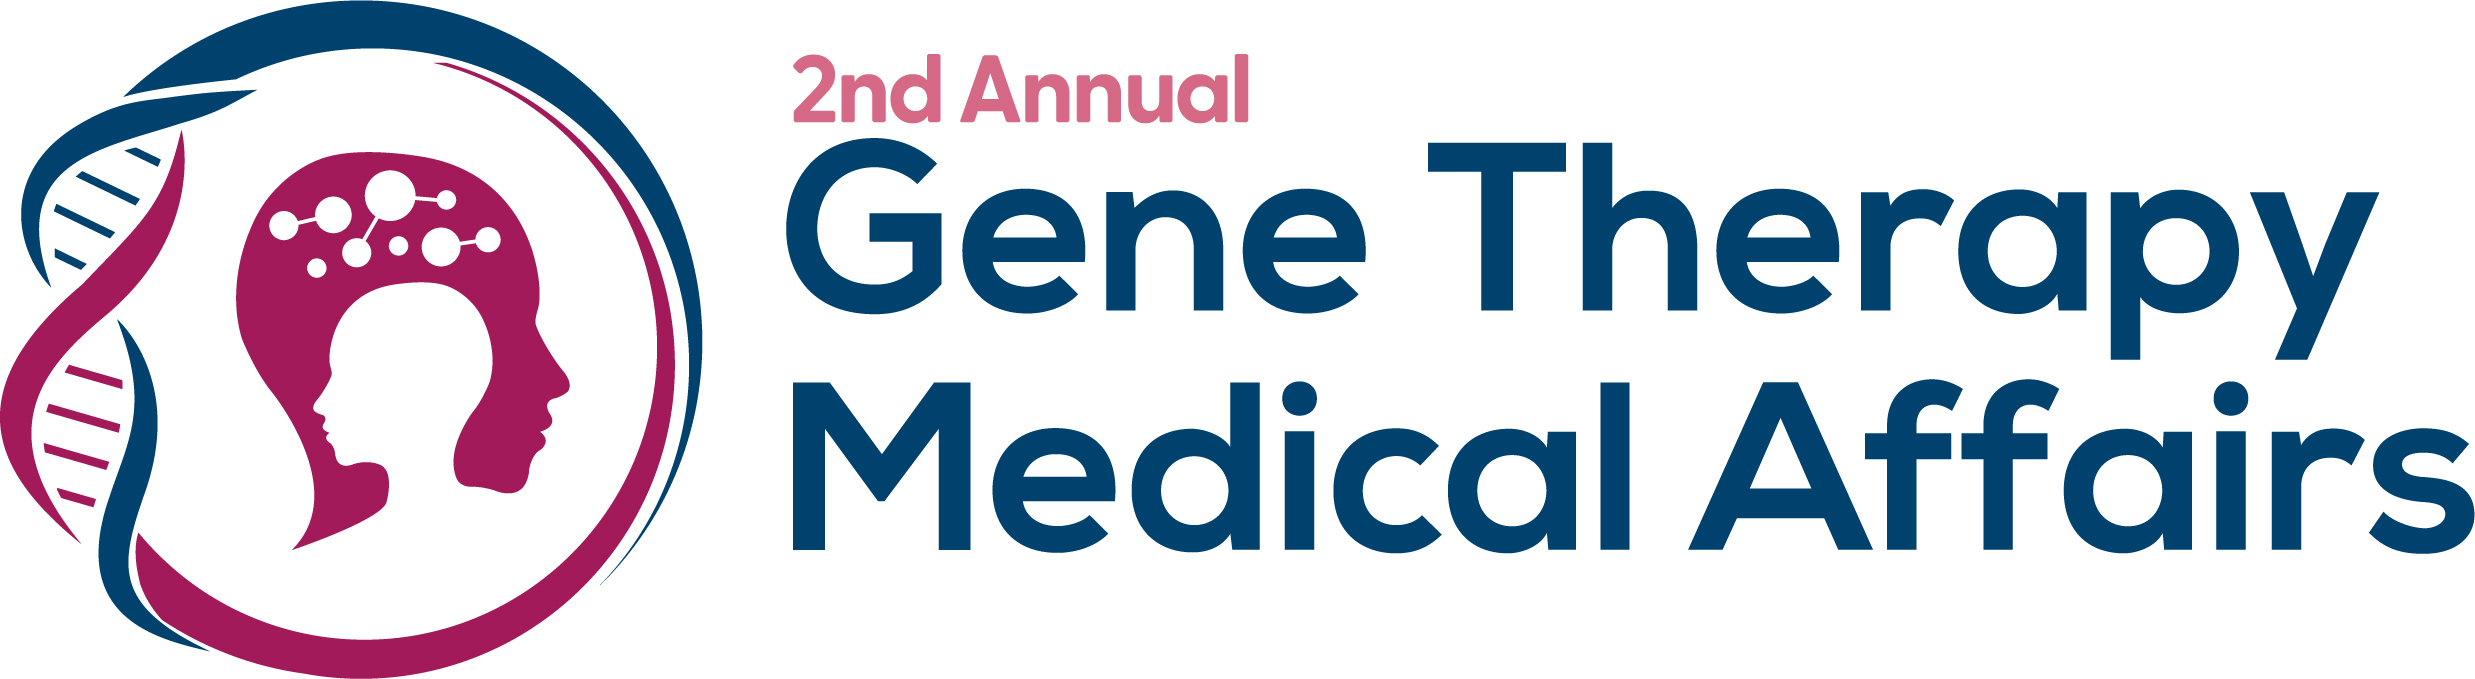 Gene Therapy Medical Affairs Summit 2022 logo